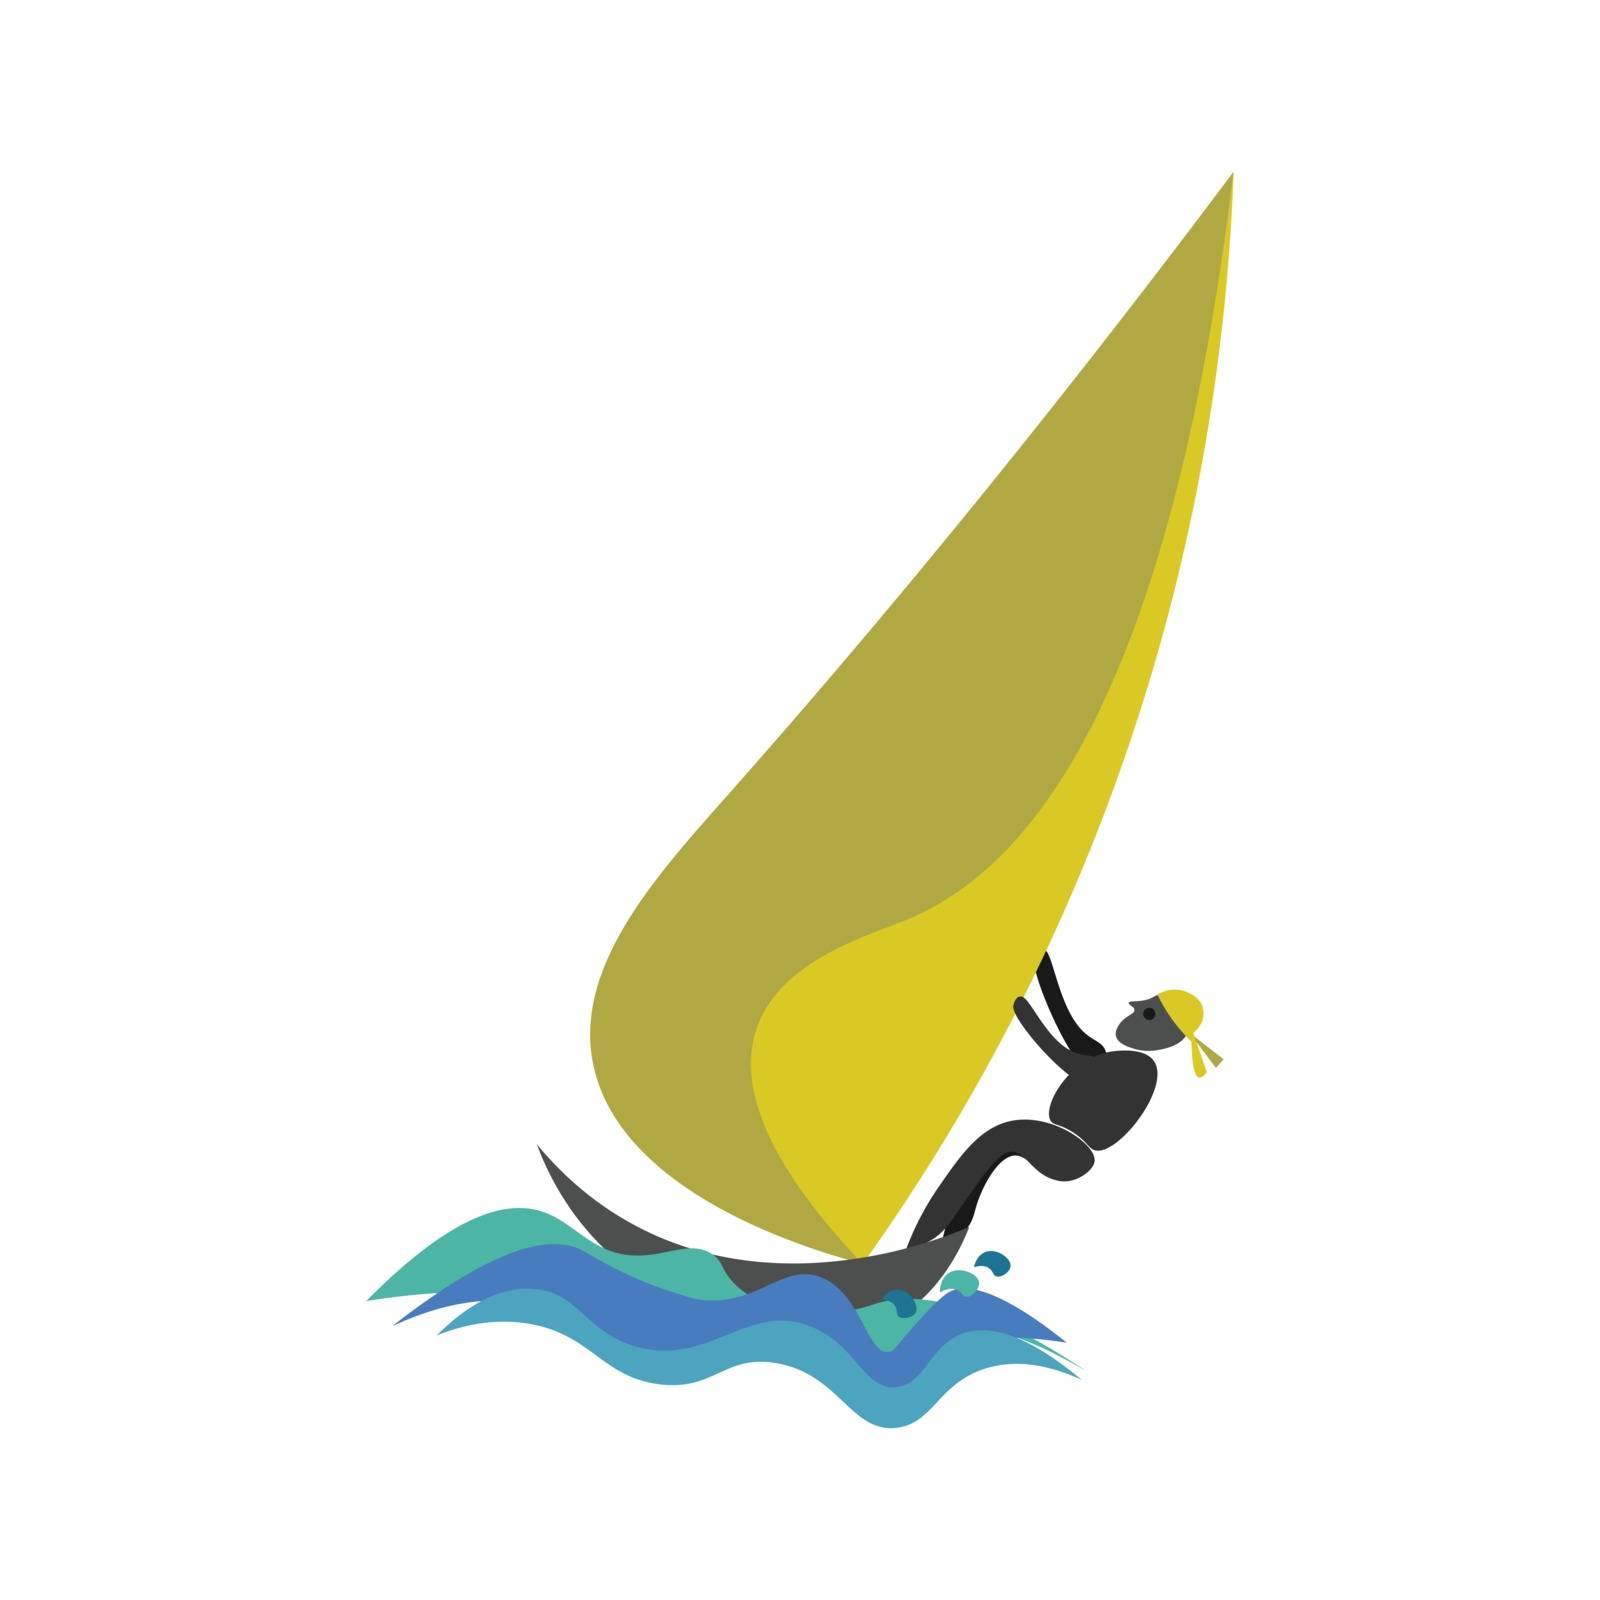 Sailing illustration vector on white background 